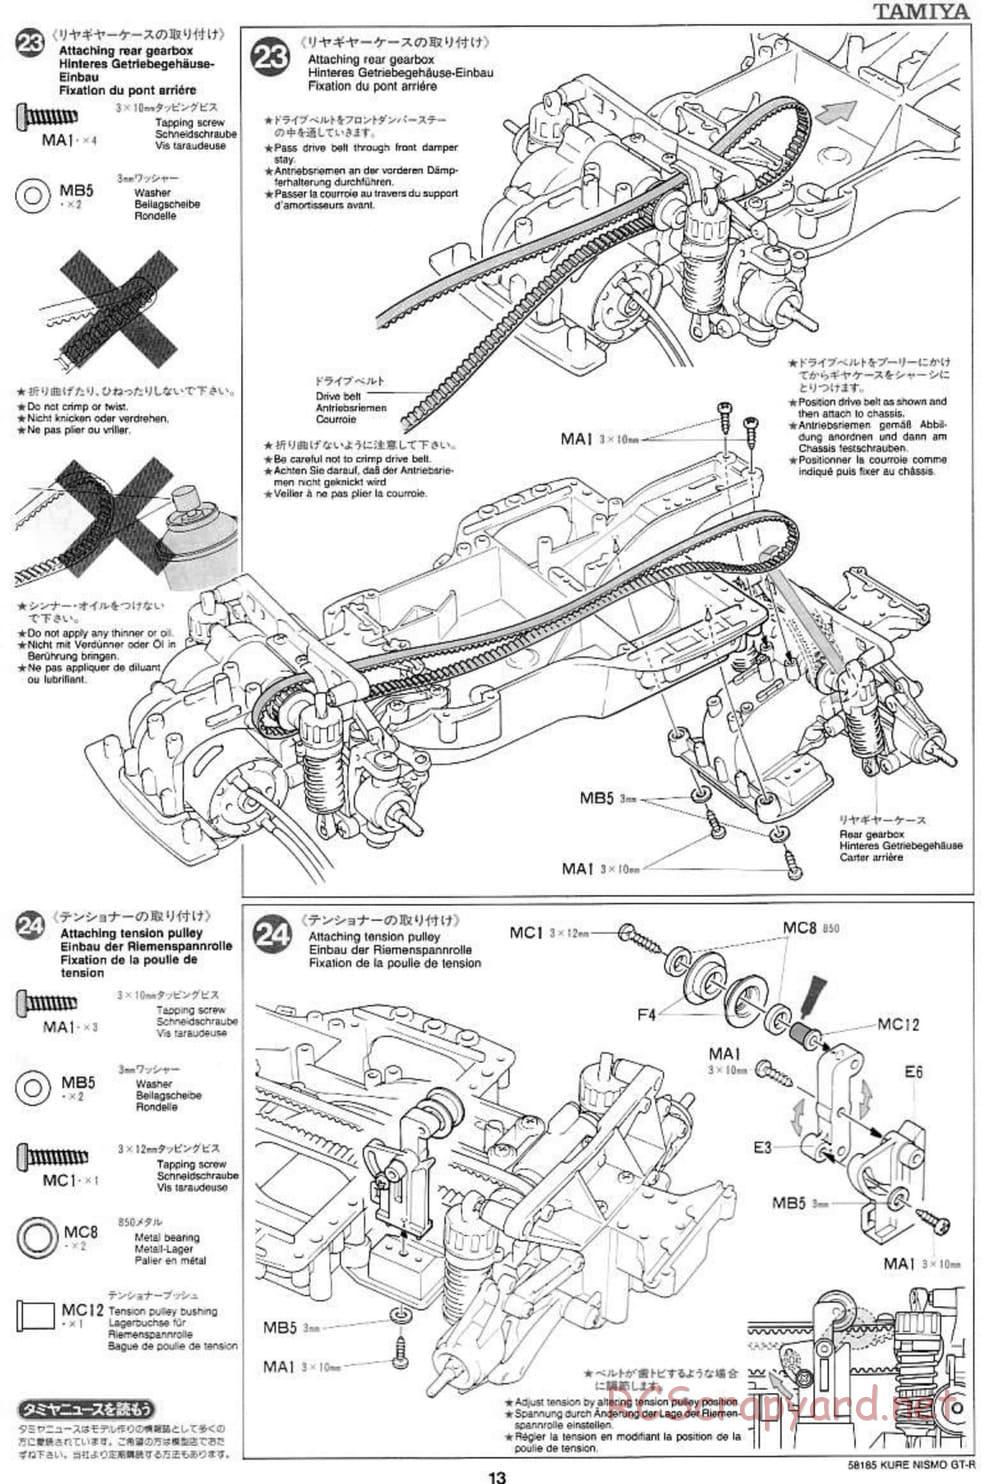 Tamiya - Kure Nismo GT-R - TA-03F Chassis - Manual - Page 13